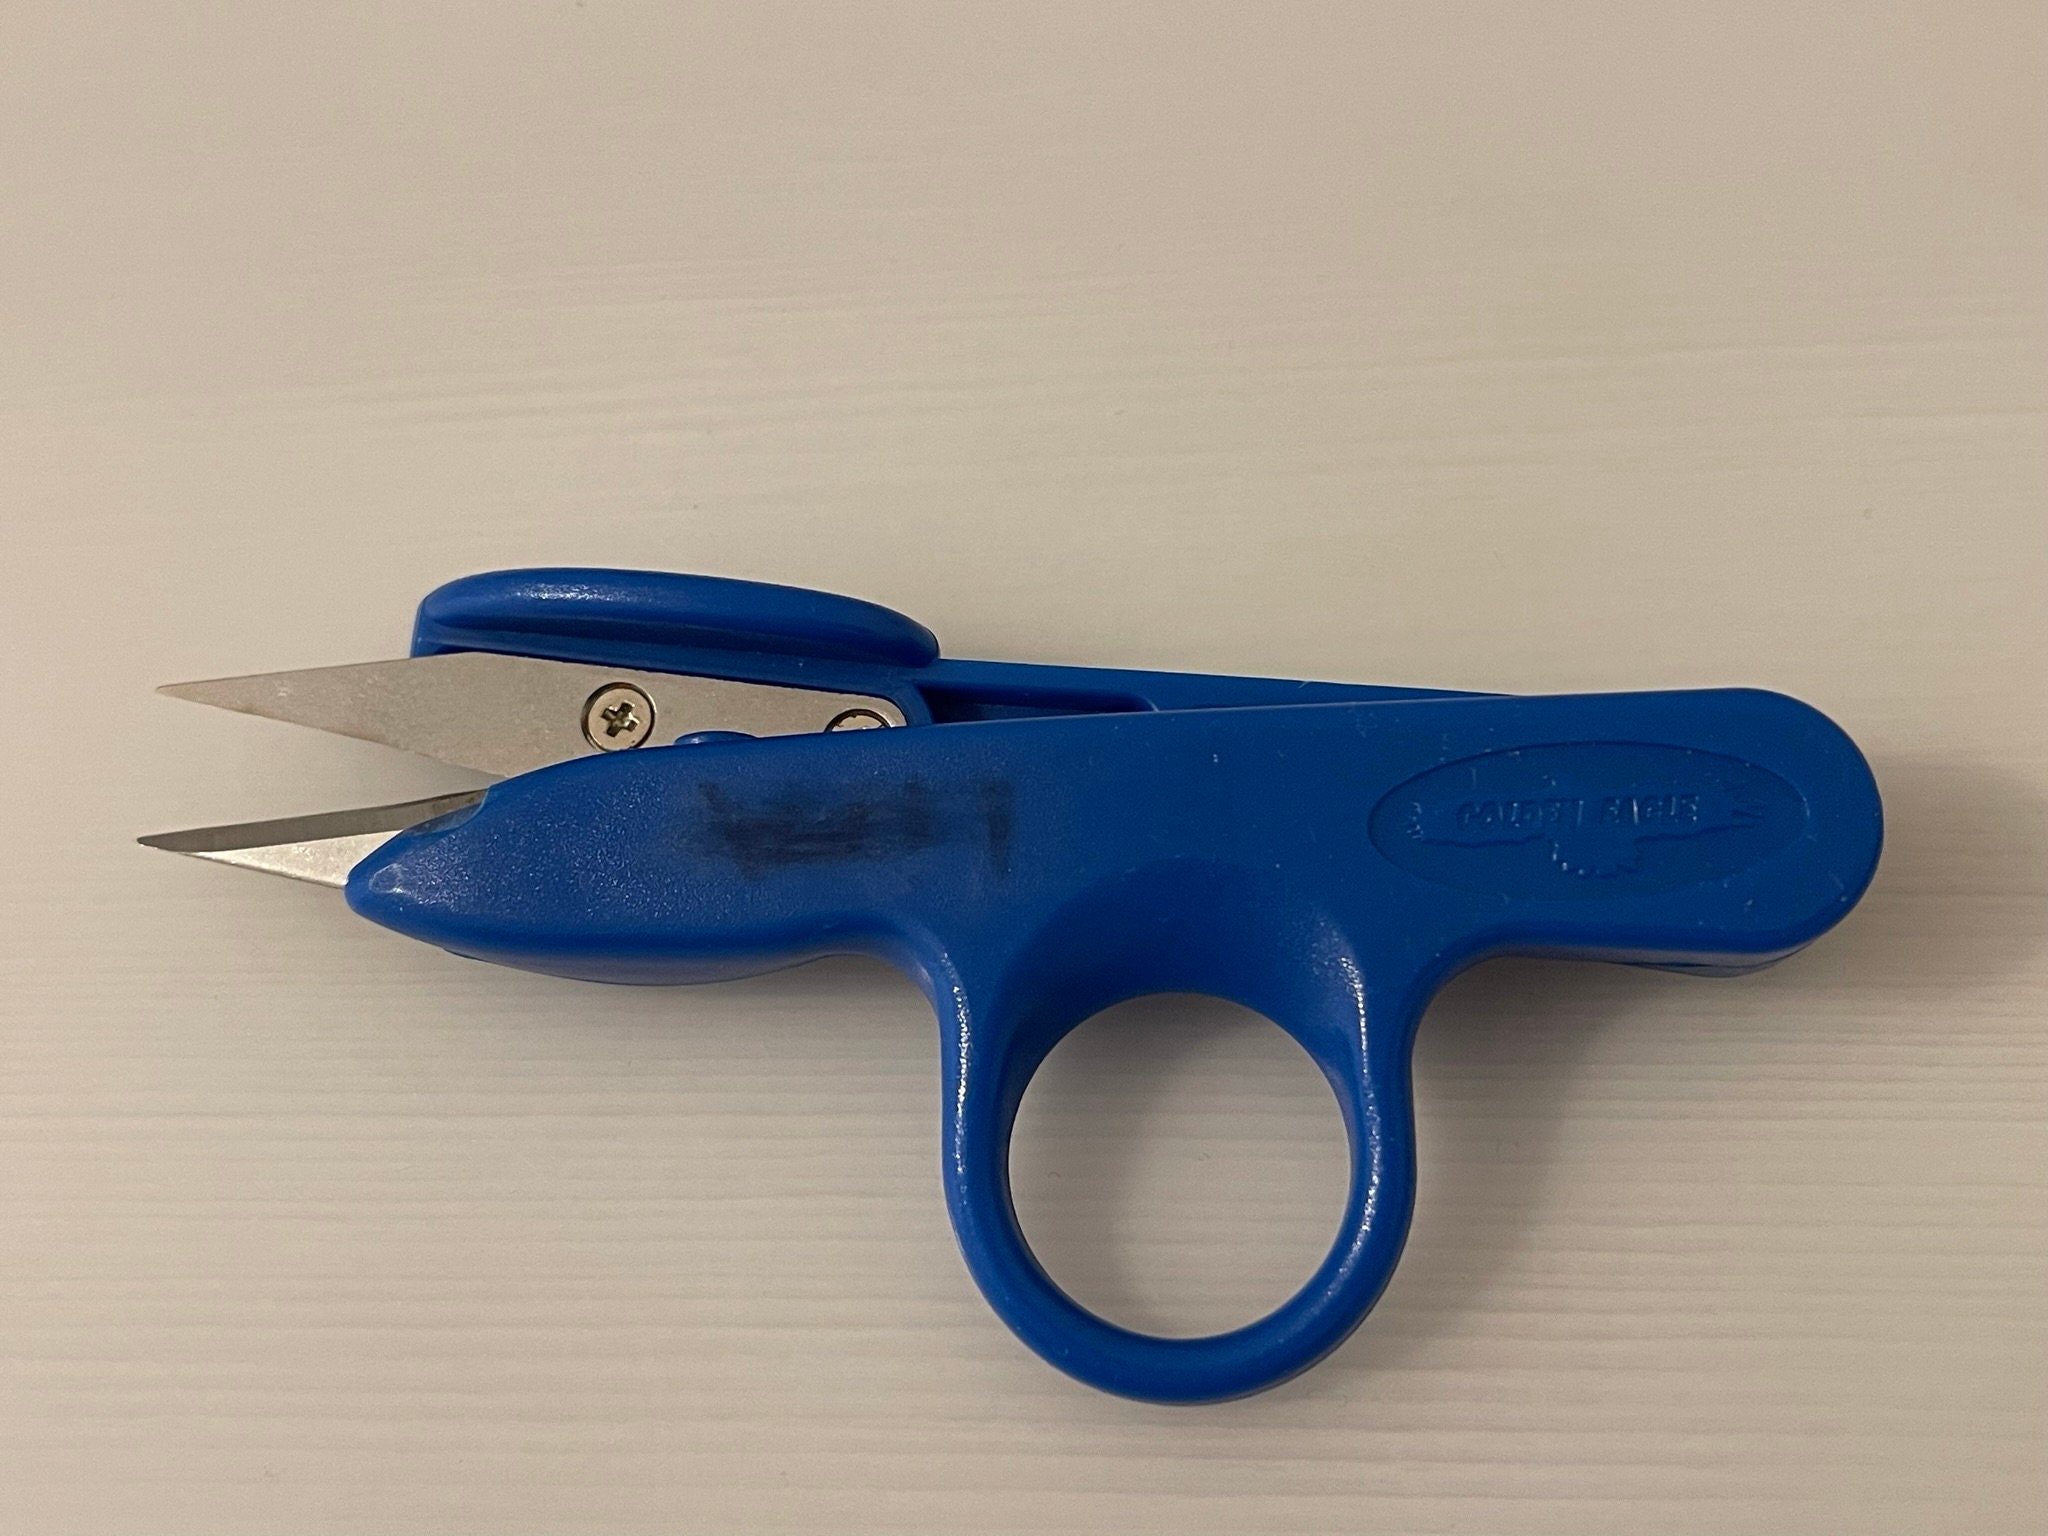 Thread Cutter Mini Scissors, Sewing Scissors Thread Snips Scissors